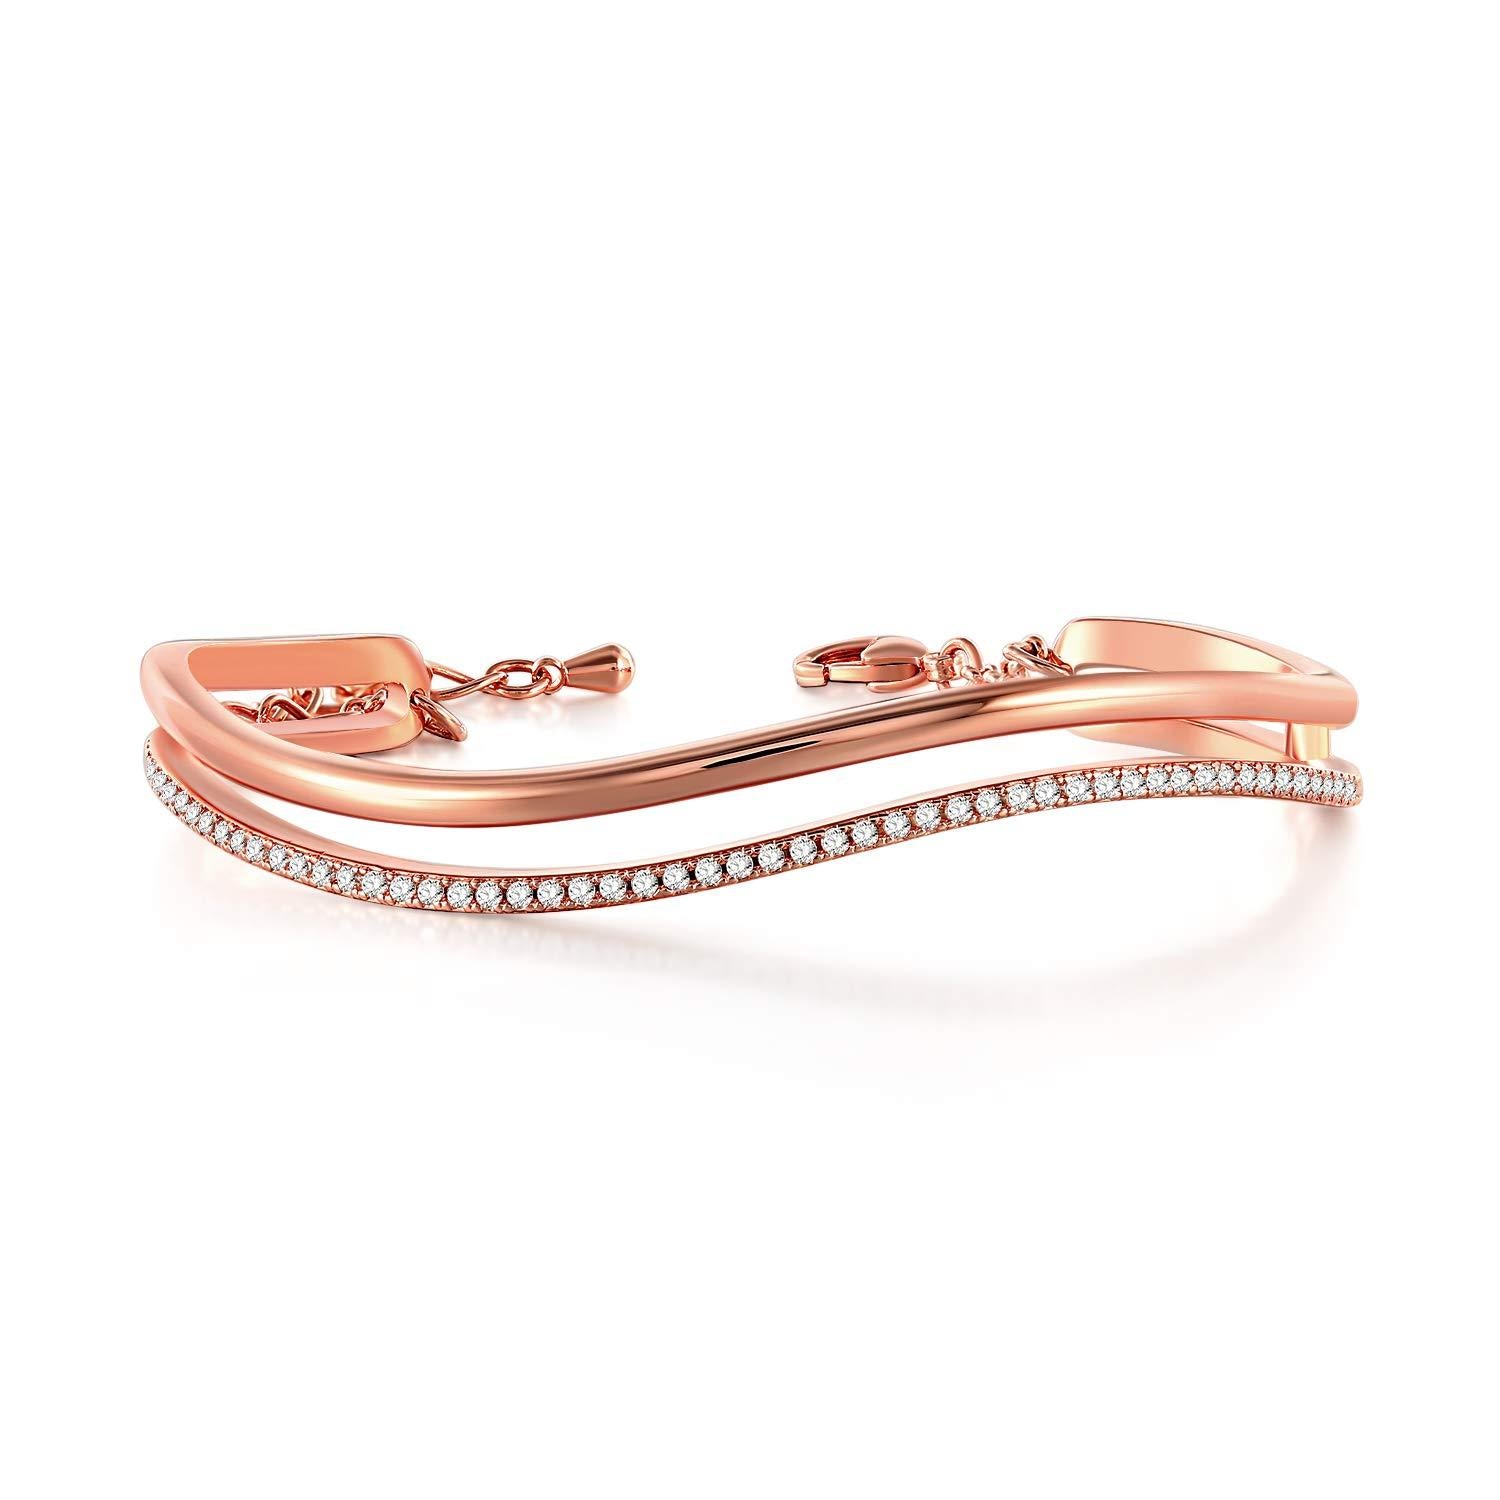 S925 Sterling Silver Rose Gold Bracelet For Women 'Timeline' Cuff Bangles Crystal Swarovski Jewelry